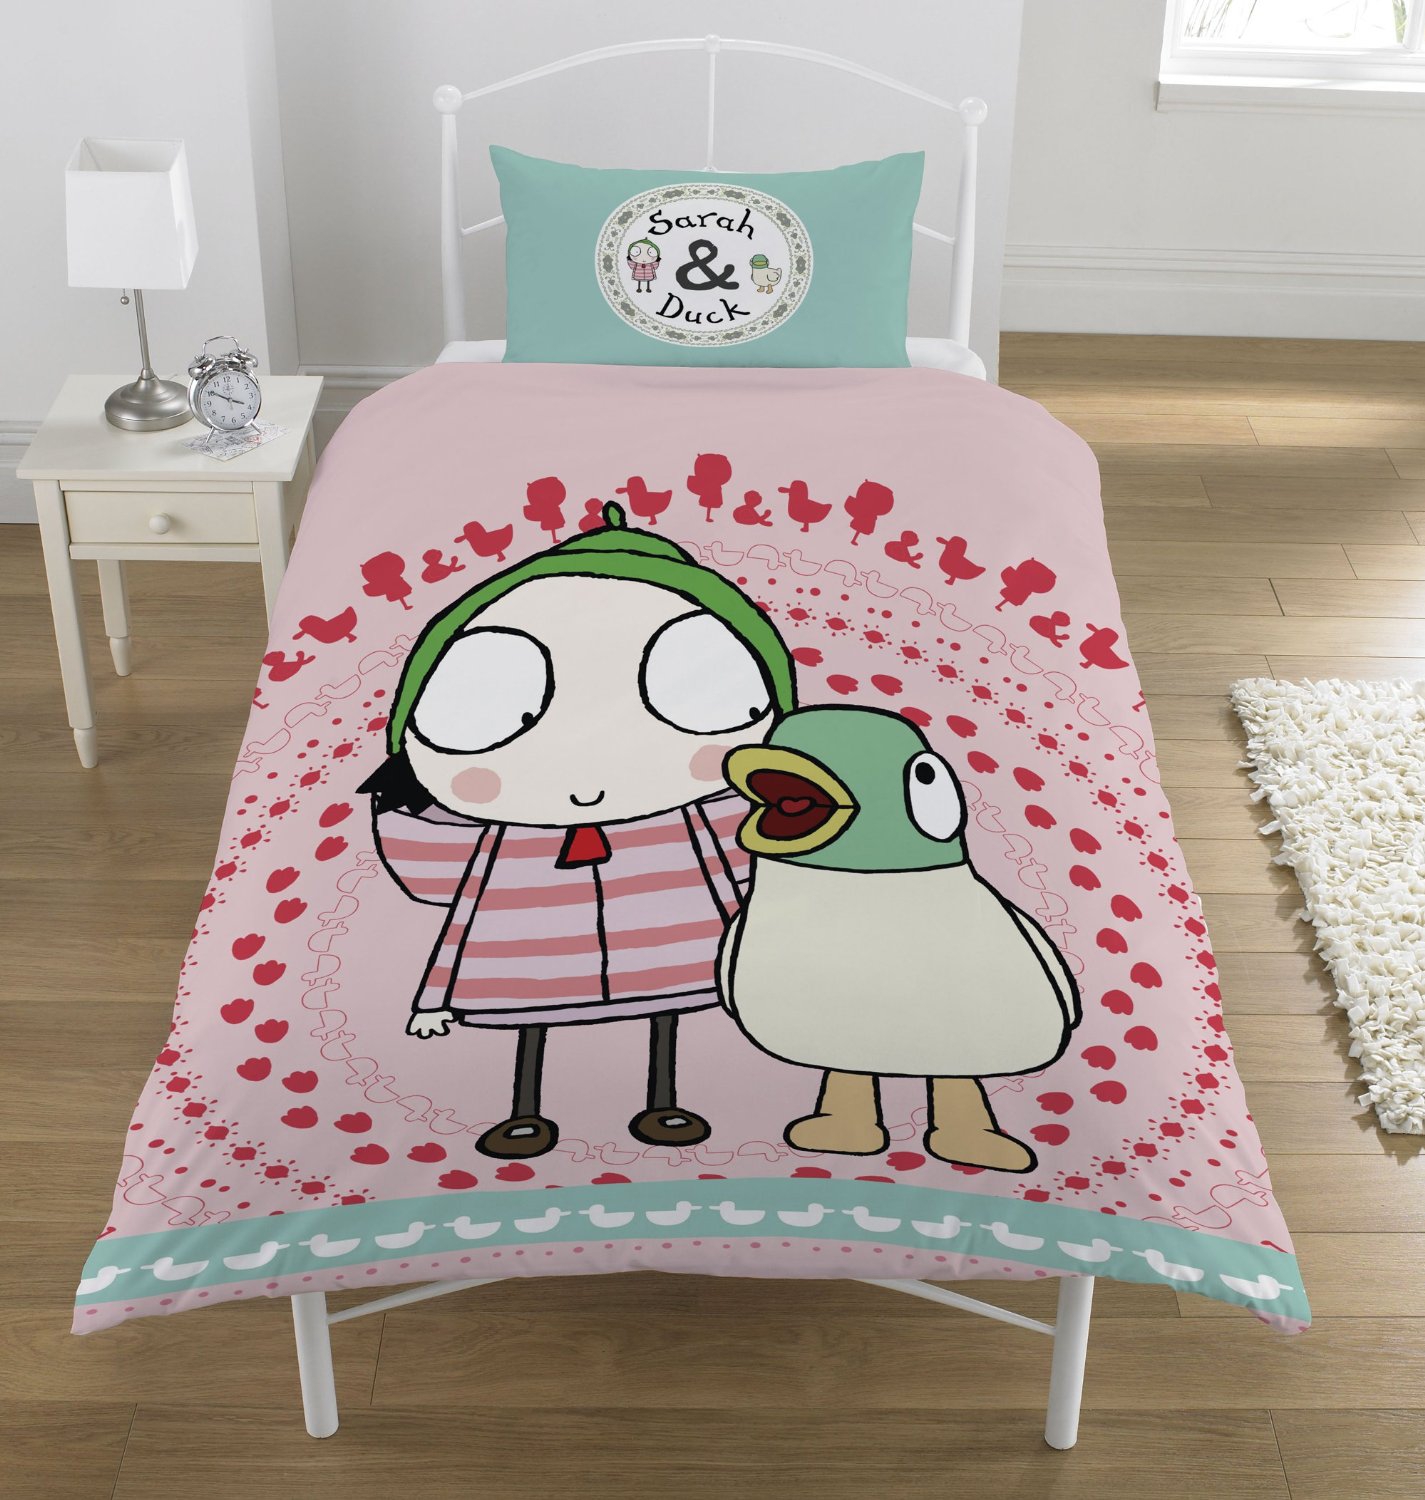 Sarah & Duck 'Noisy Duck' Panel Single Bed Duvet Quilt Cover Set